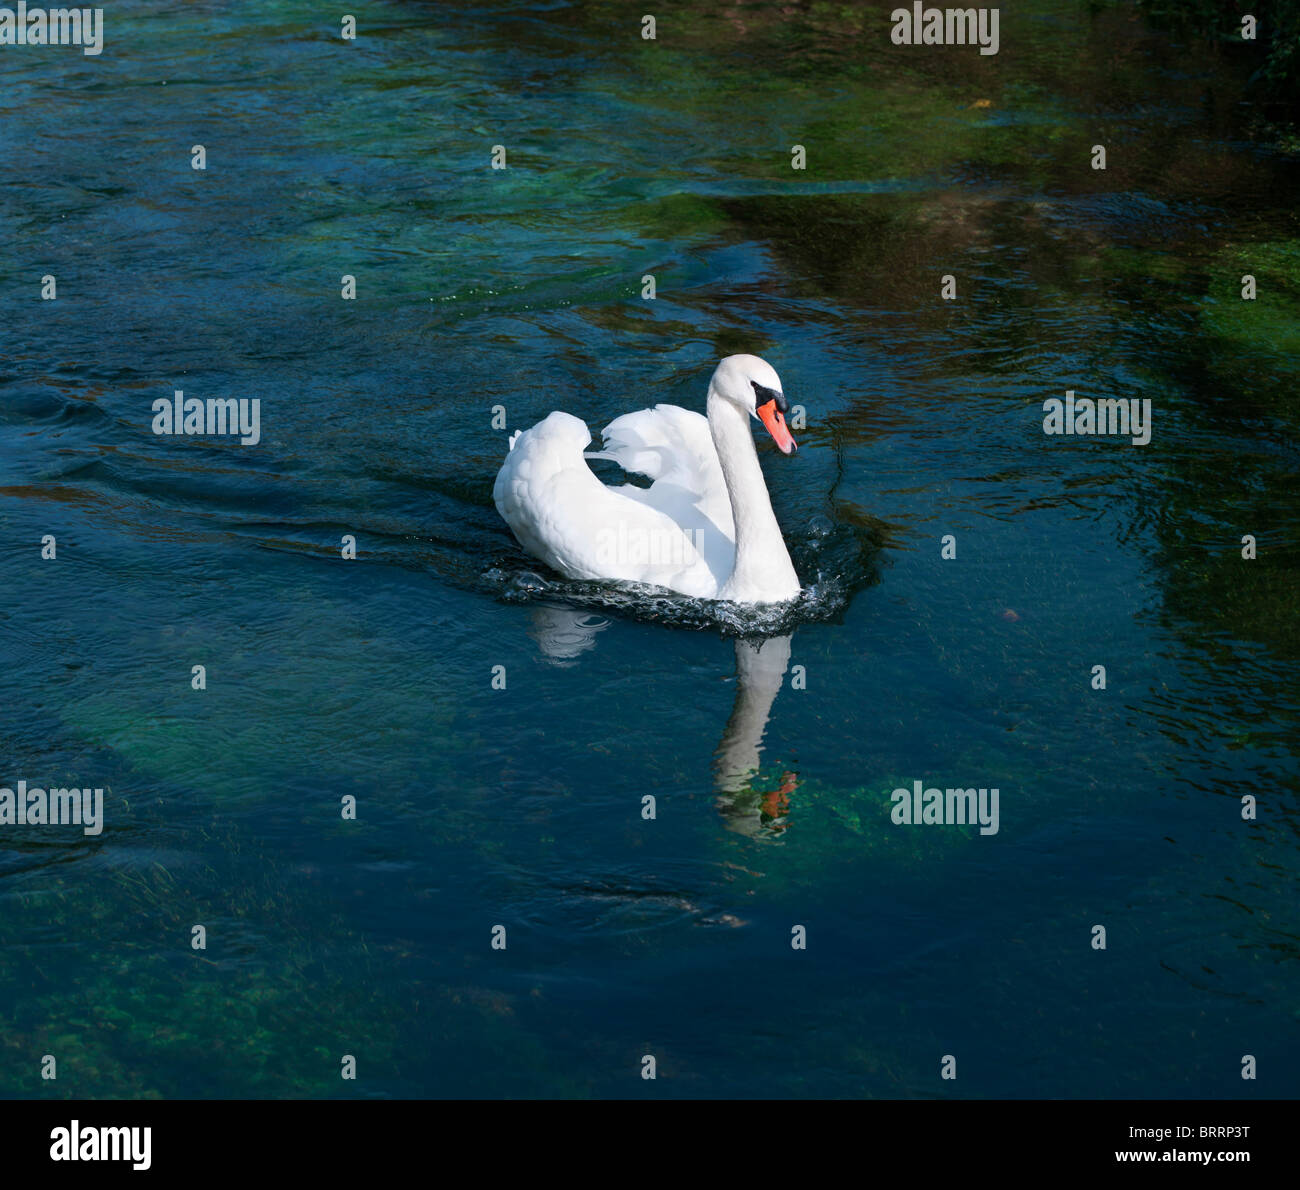 Swimming White Swan in River Stock Photo